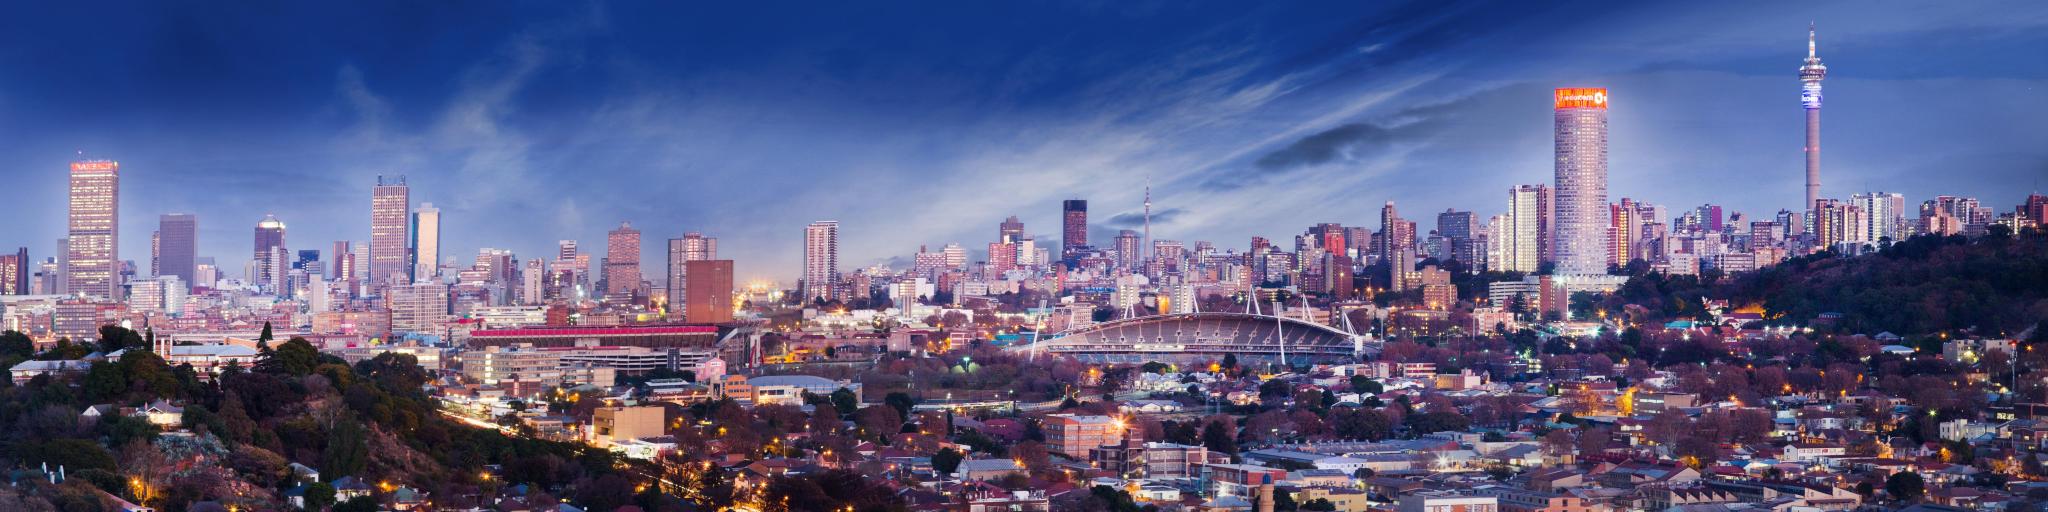 Johannesburg Skyline at night time 